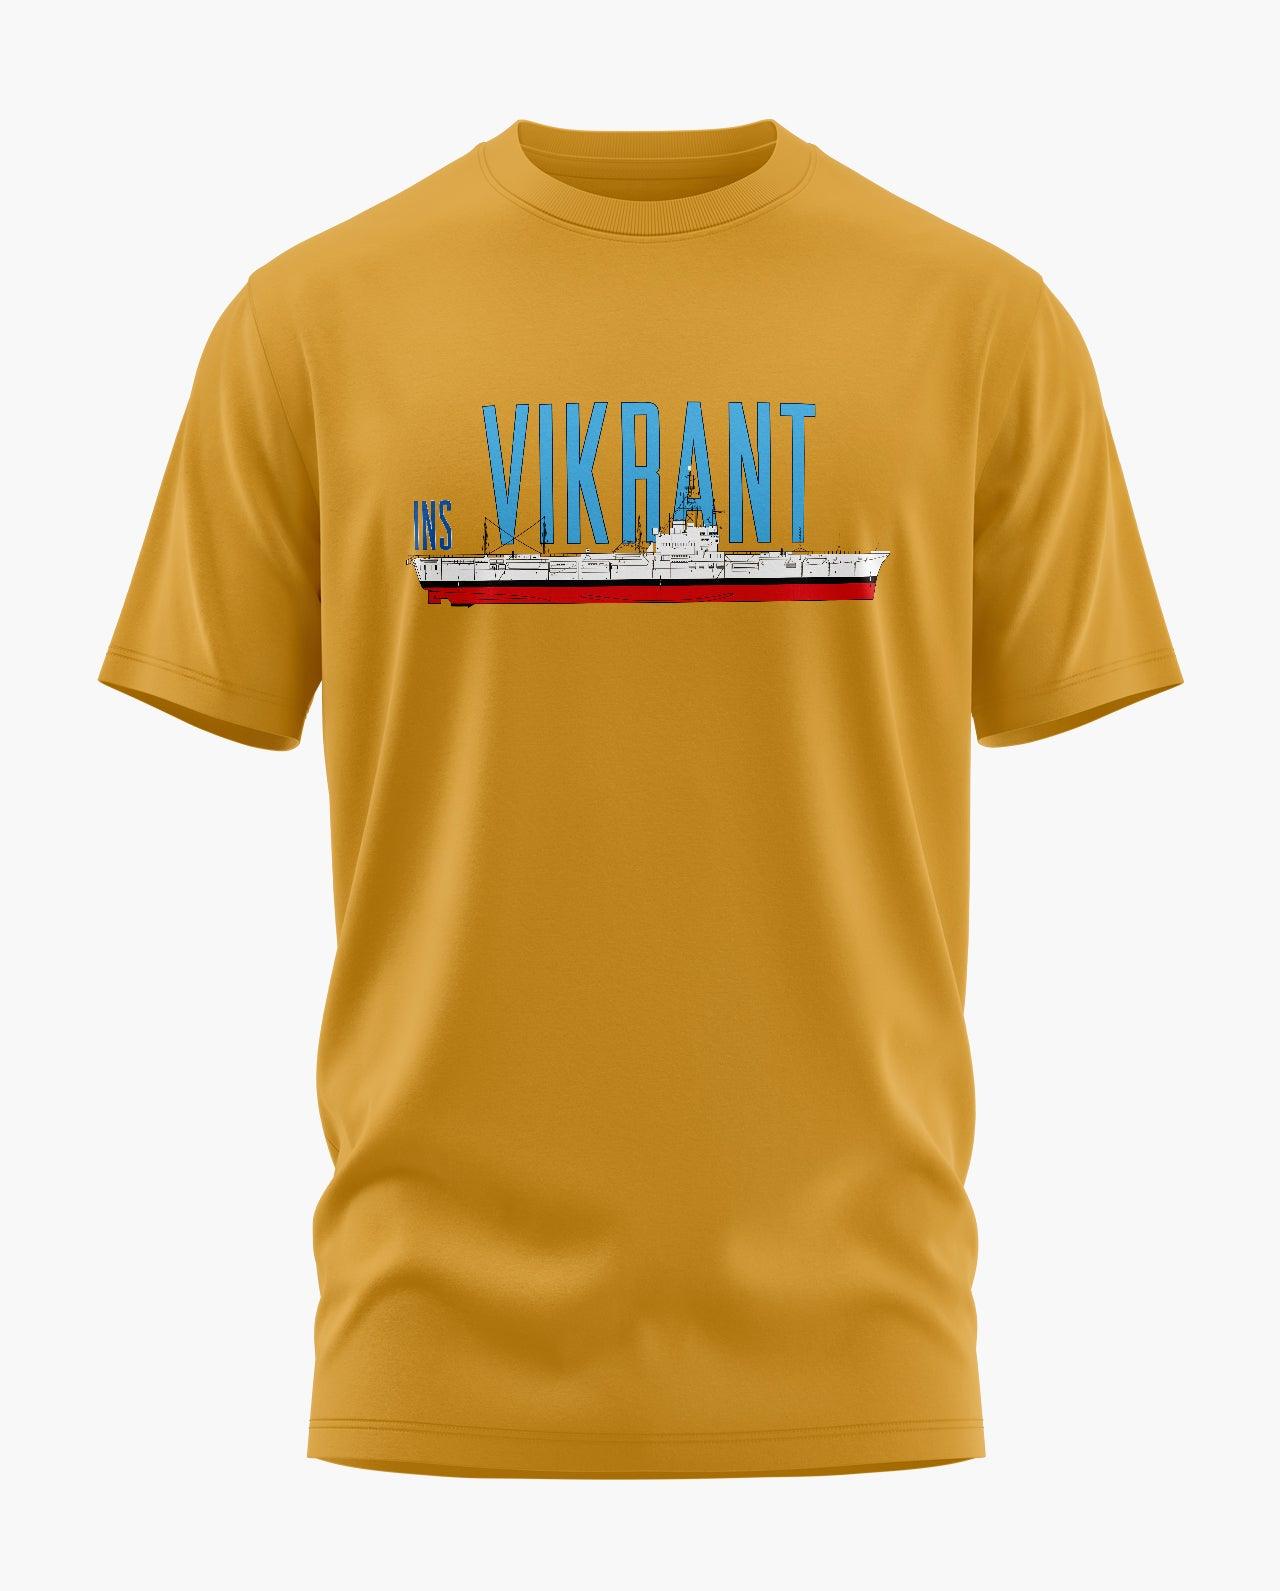 INS Vikrant T-Shirt - Aero Armour